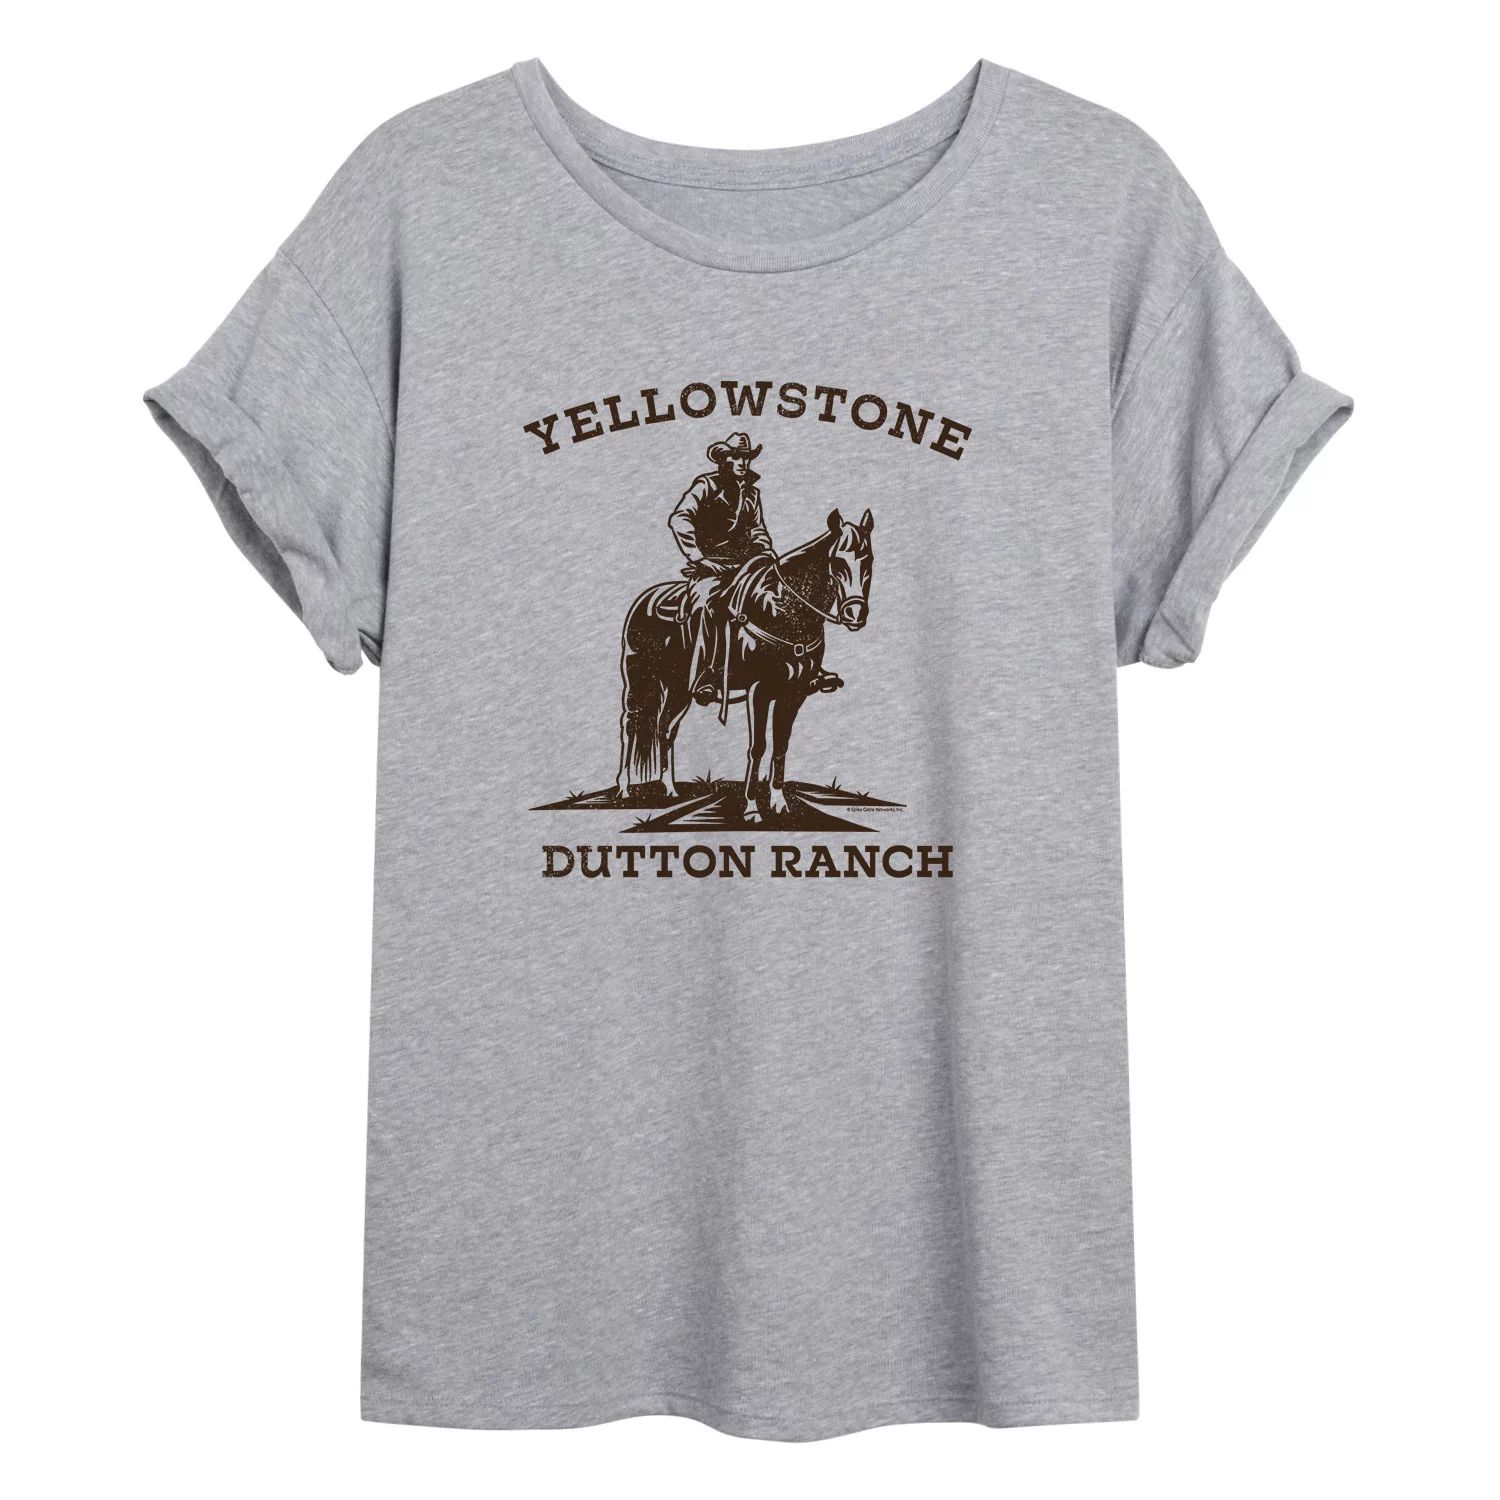 Юниорская футболка Yellowstone Cowboy с струящимся рисунком Licensed Character